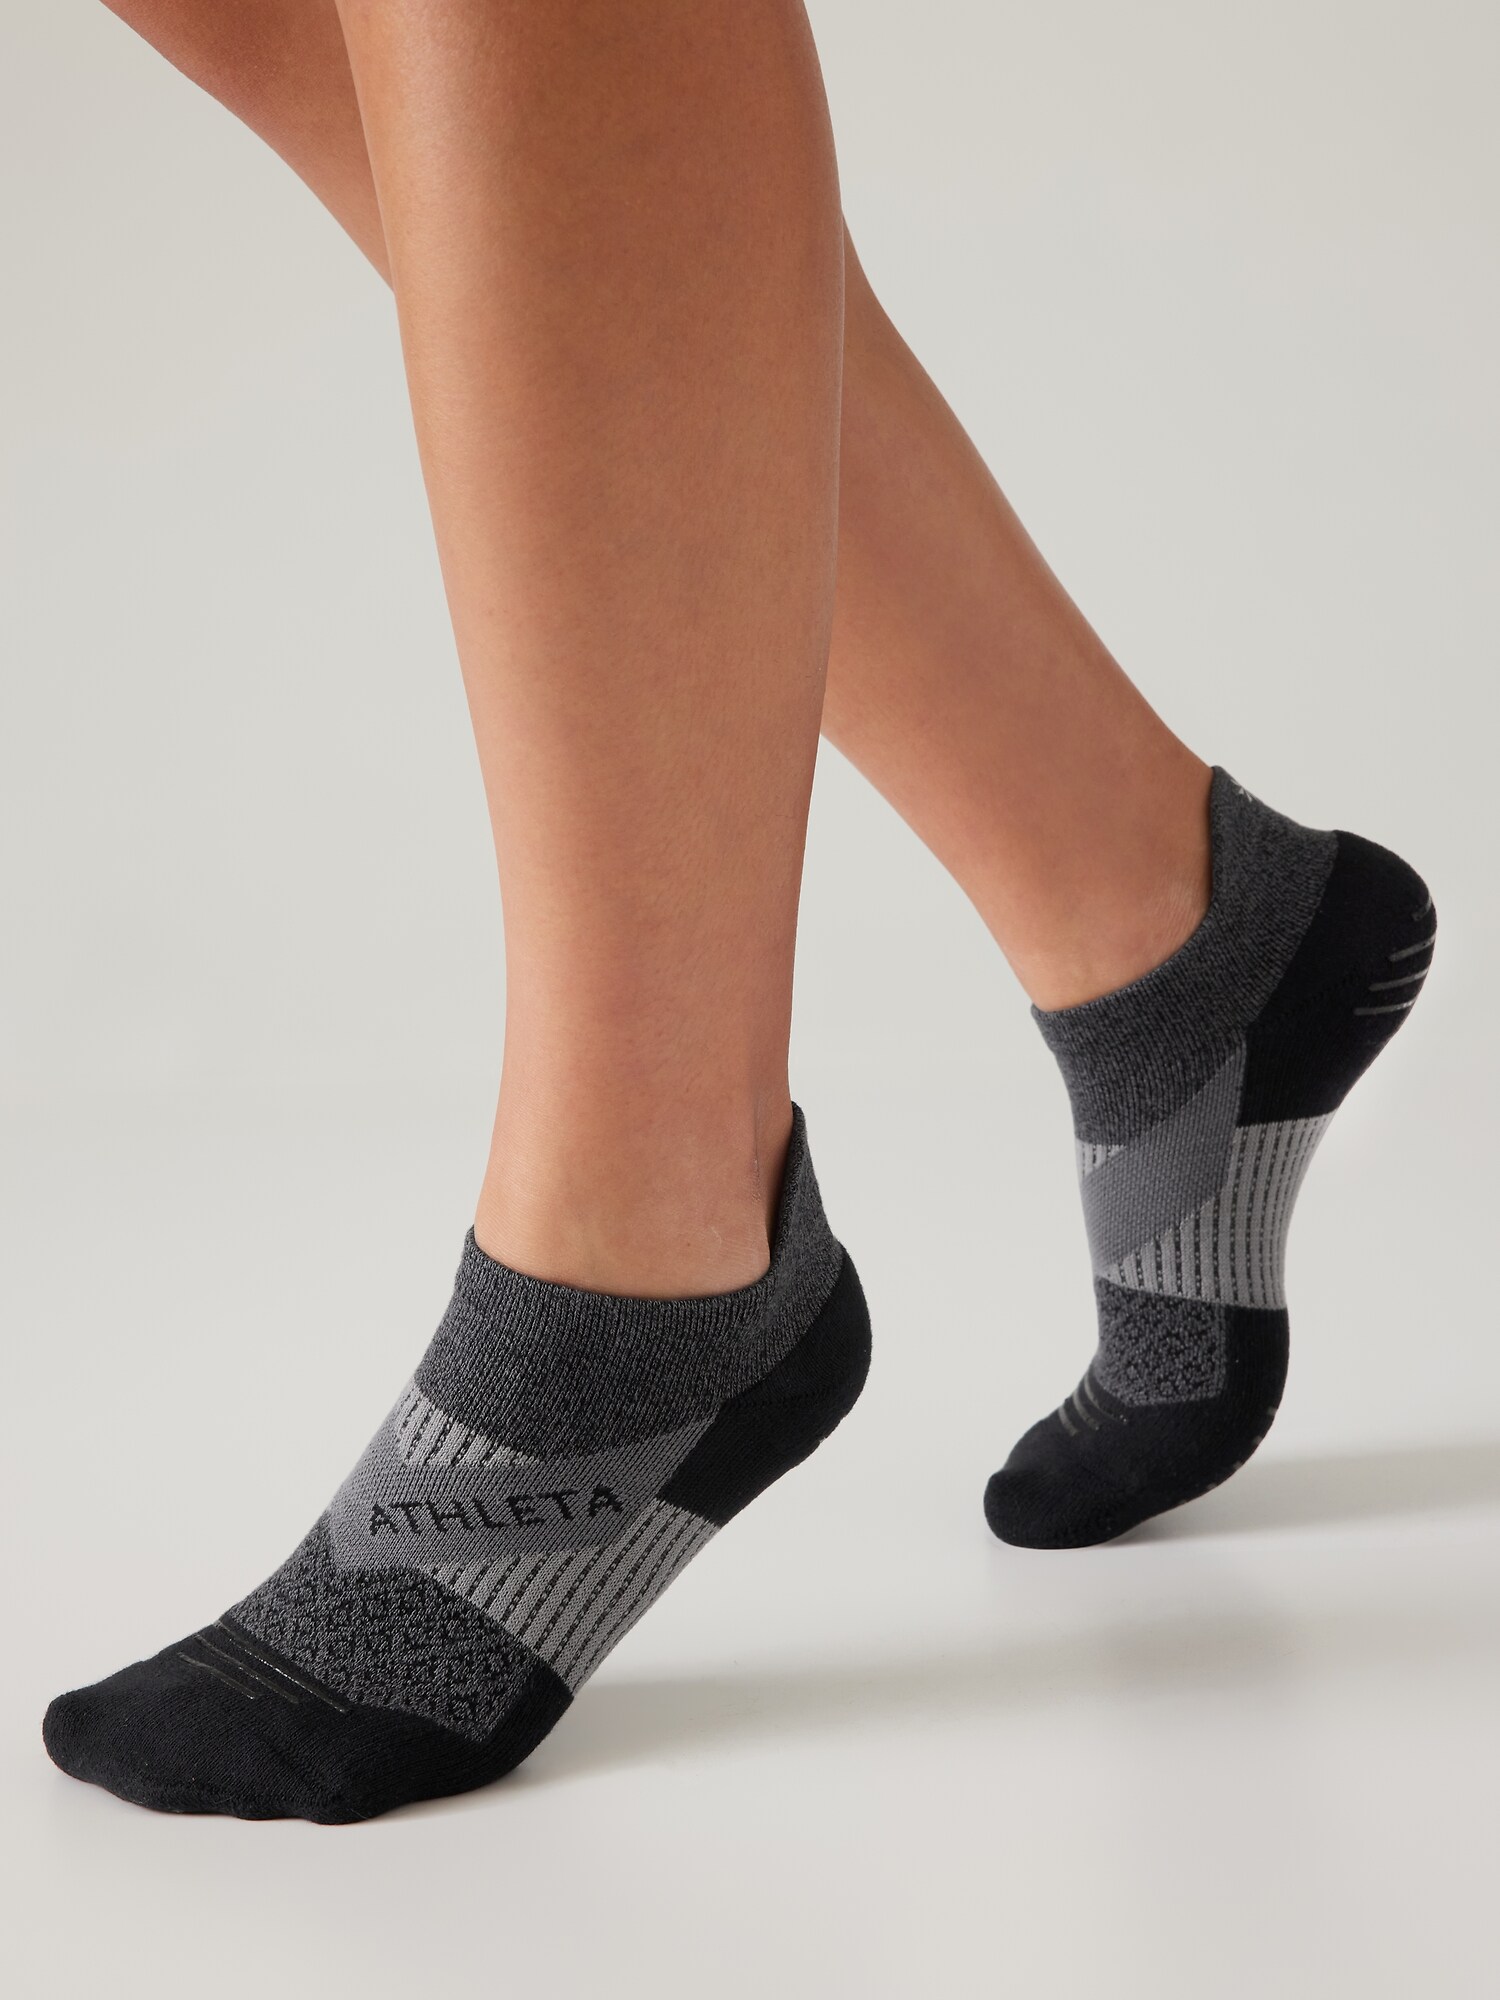 Grip Socks For Pilates and Yoga